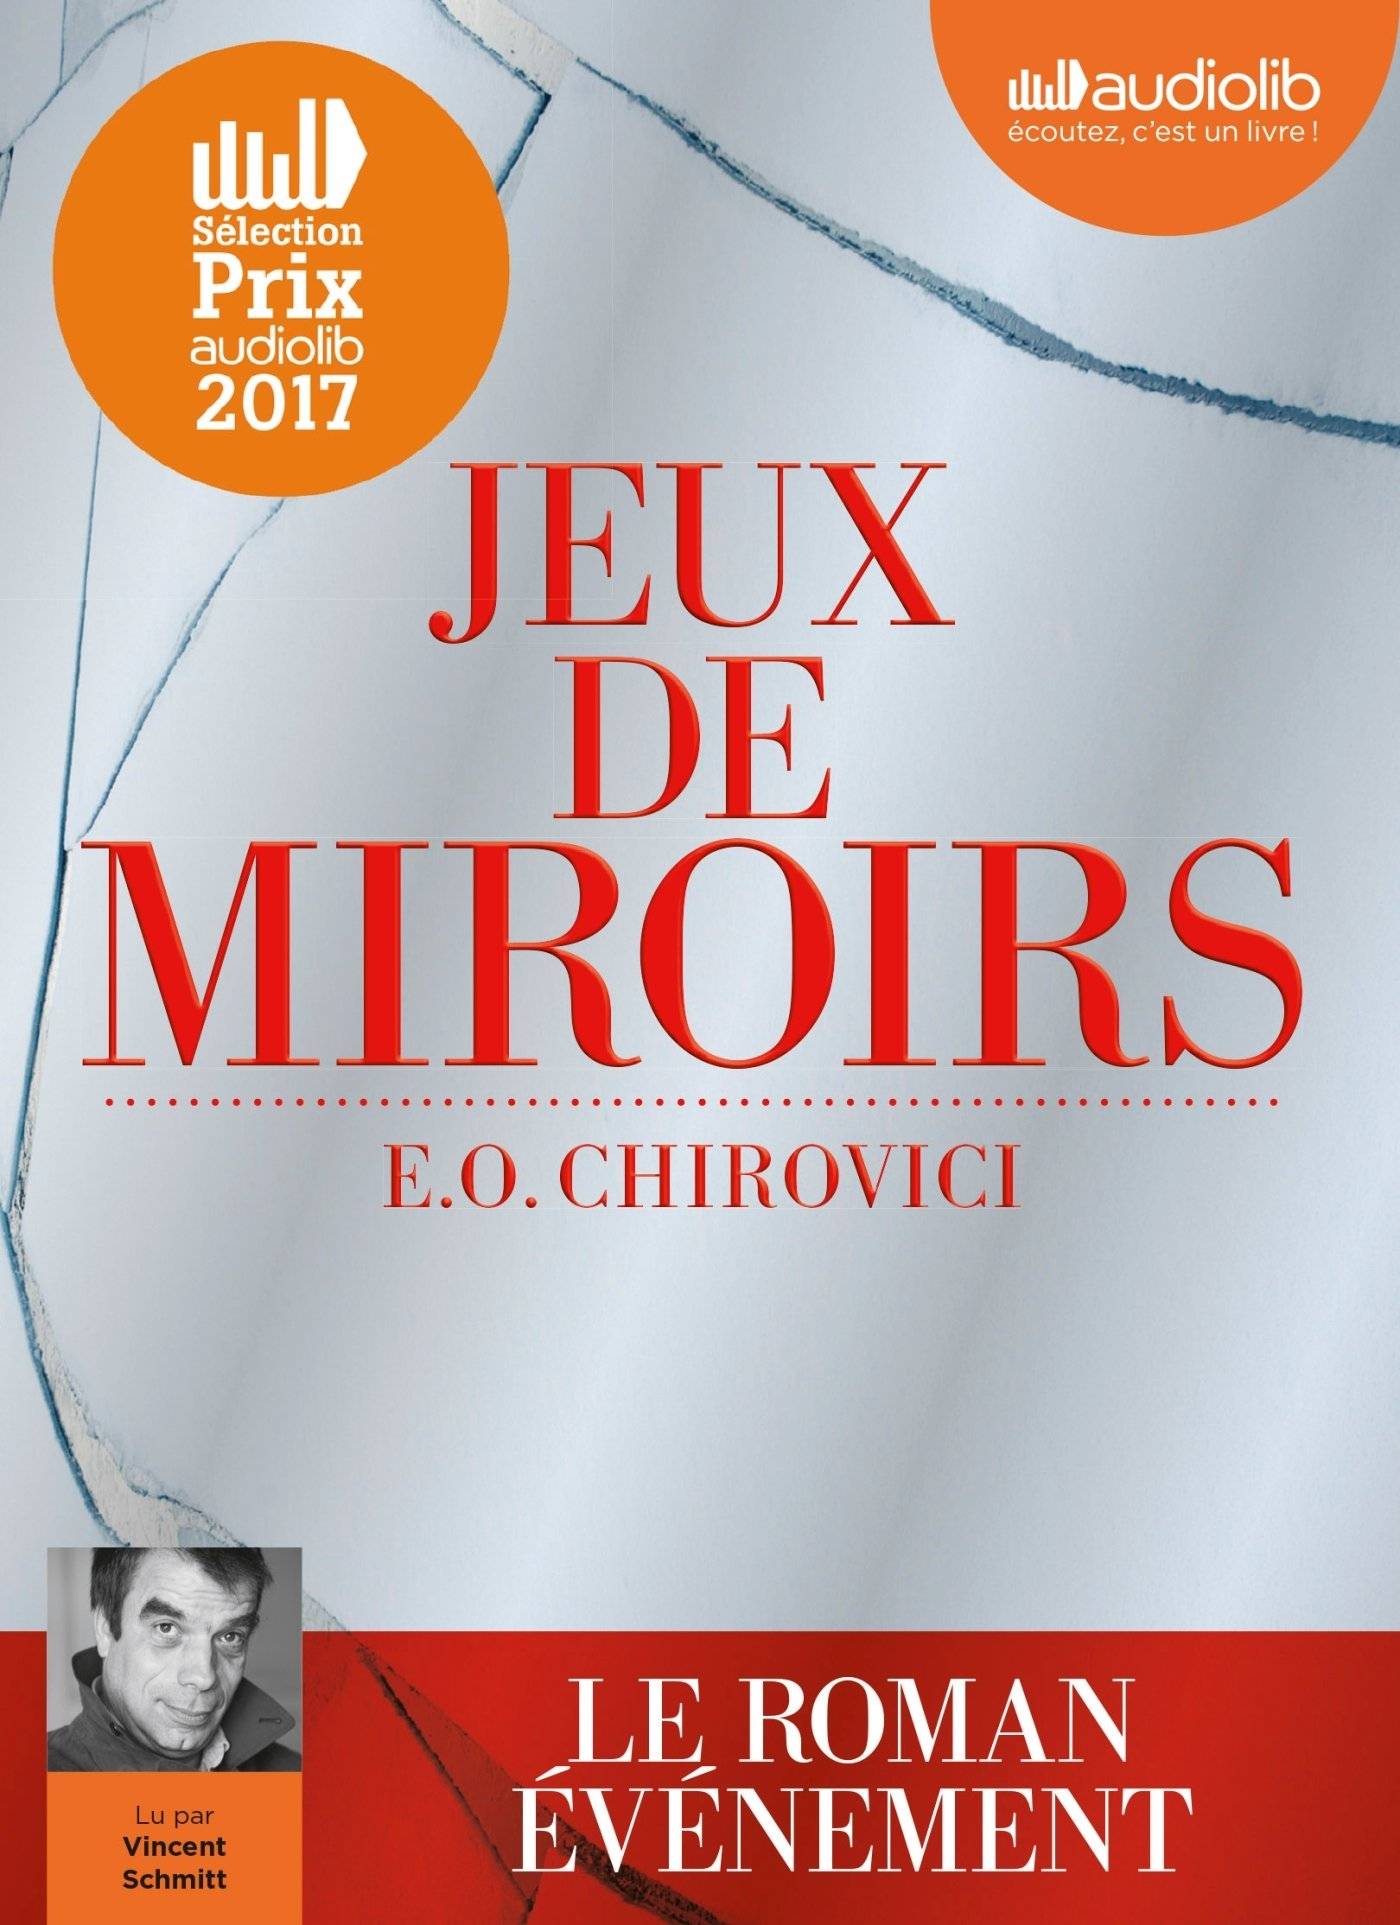 E.O. Chirovici, "Jeux de miroirs"